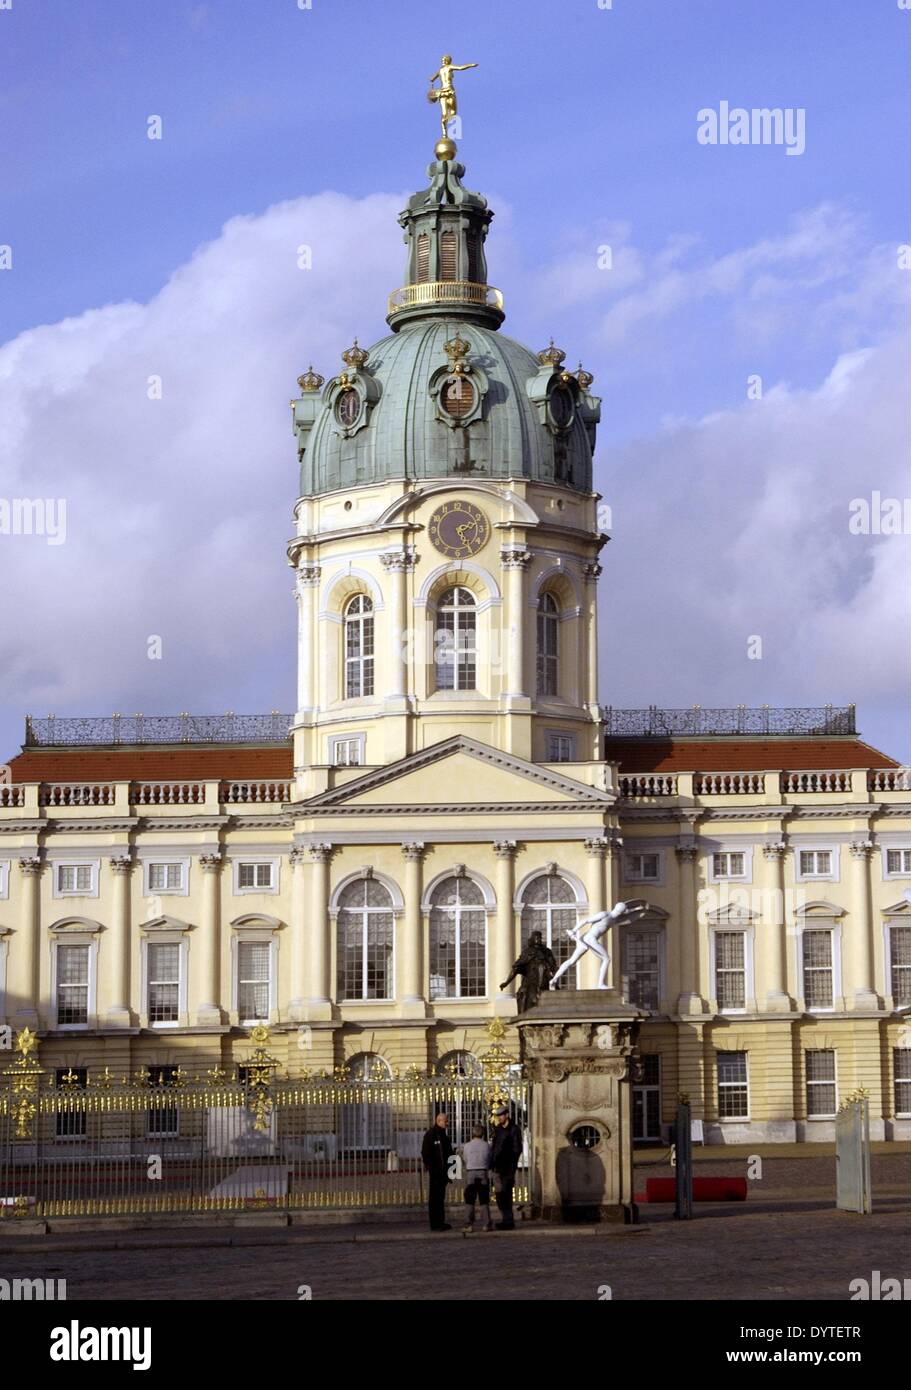 The Charlottenburg Palace, 2005 Stock Photo